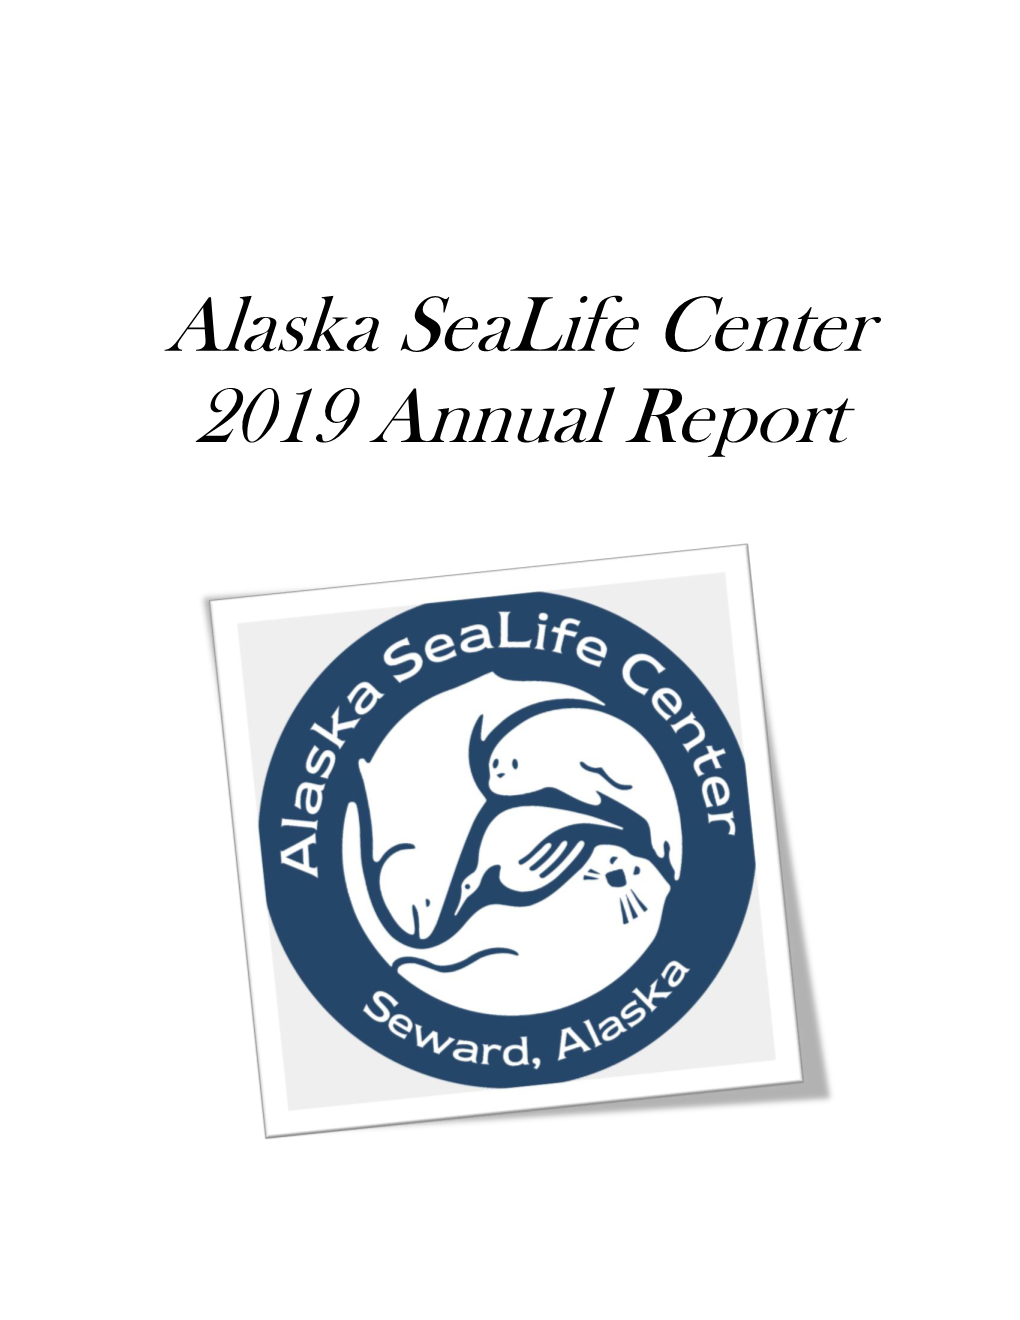 Alaska Sealife Center 2019 Annual Report